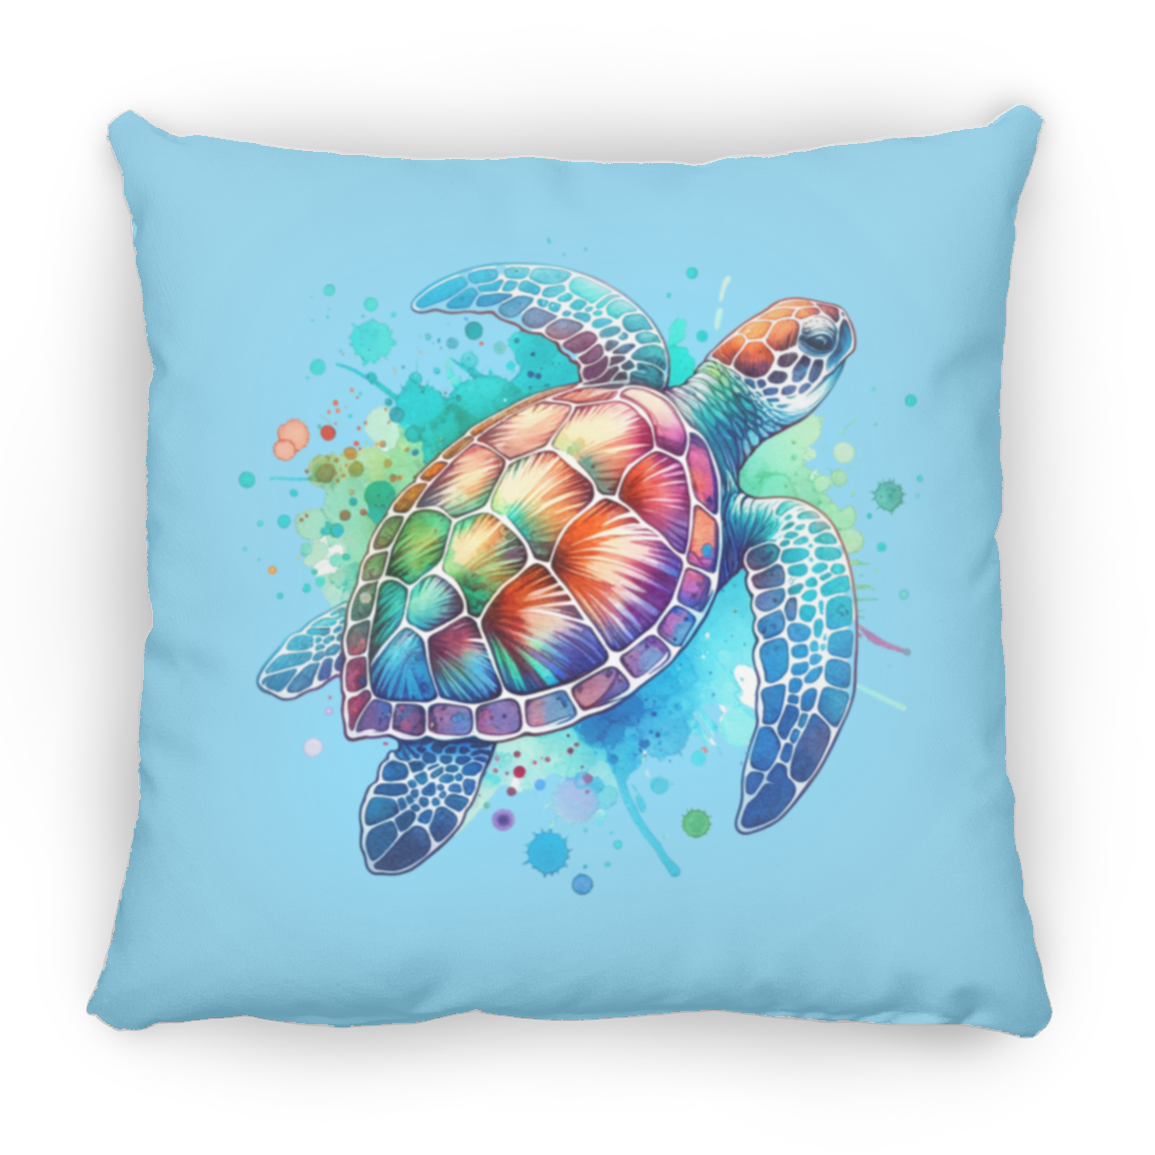 Sea Turtle WC2 - Pillows